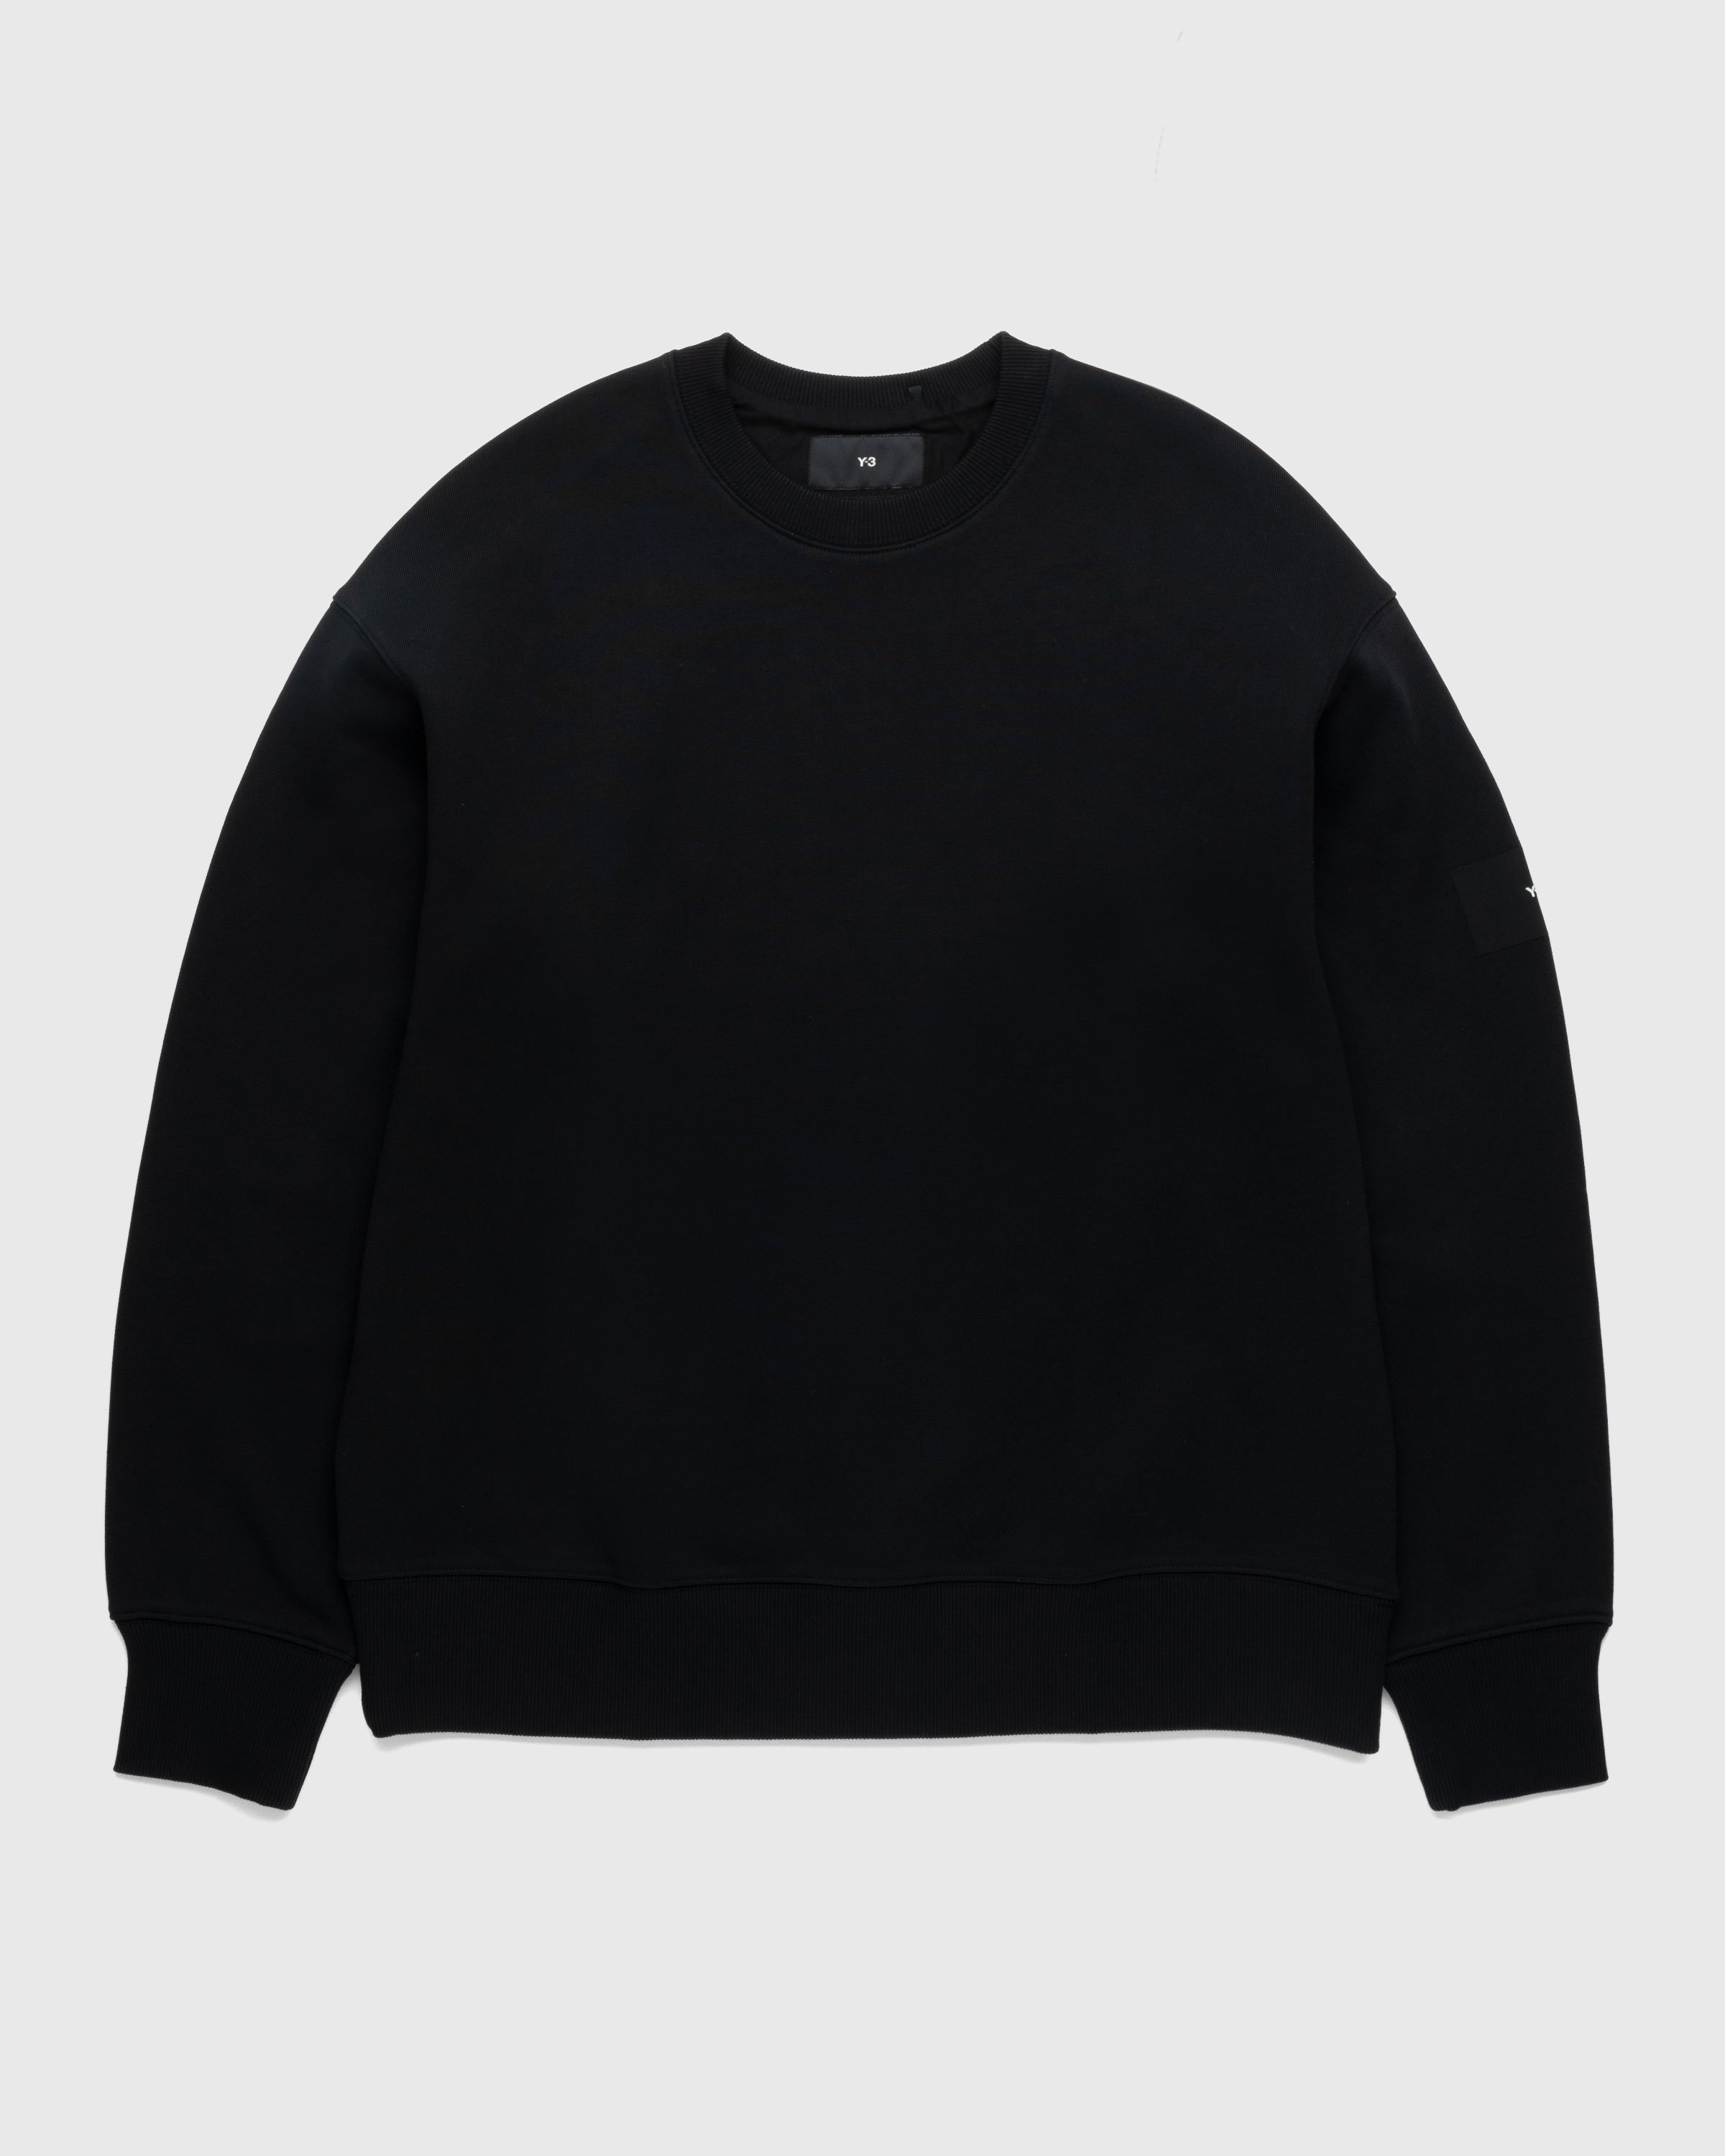 Y-3 - FT Crew Sweatshirt Black - Clothing - Black - Image 1